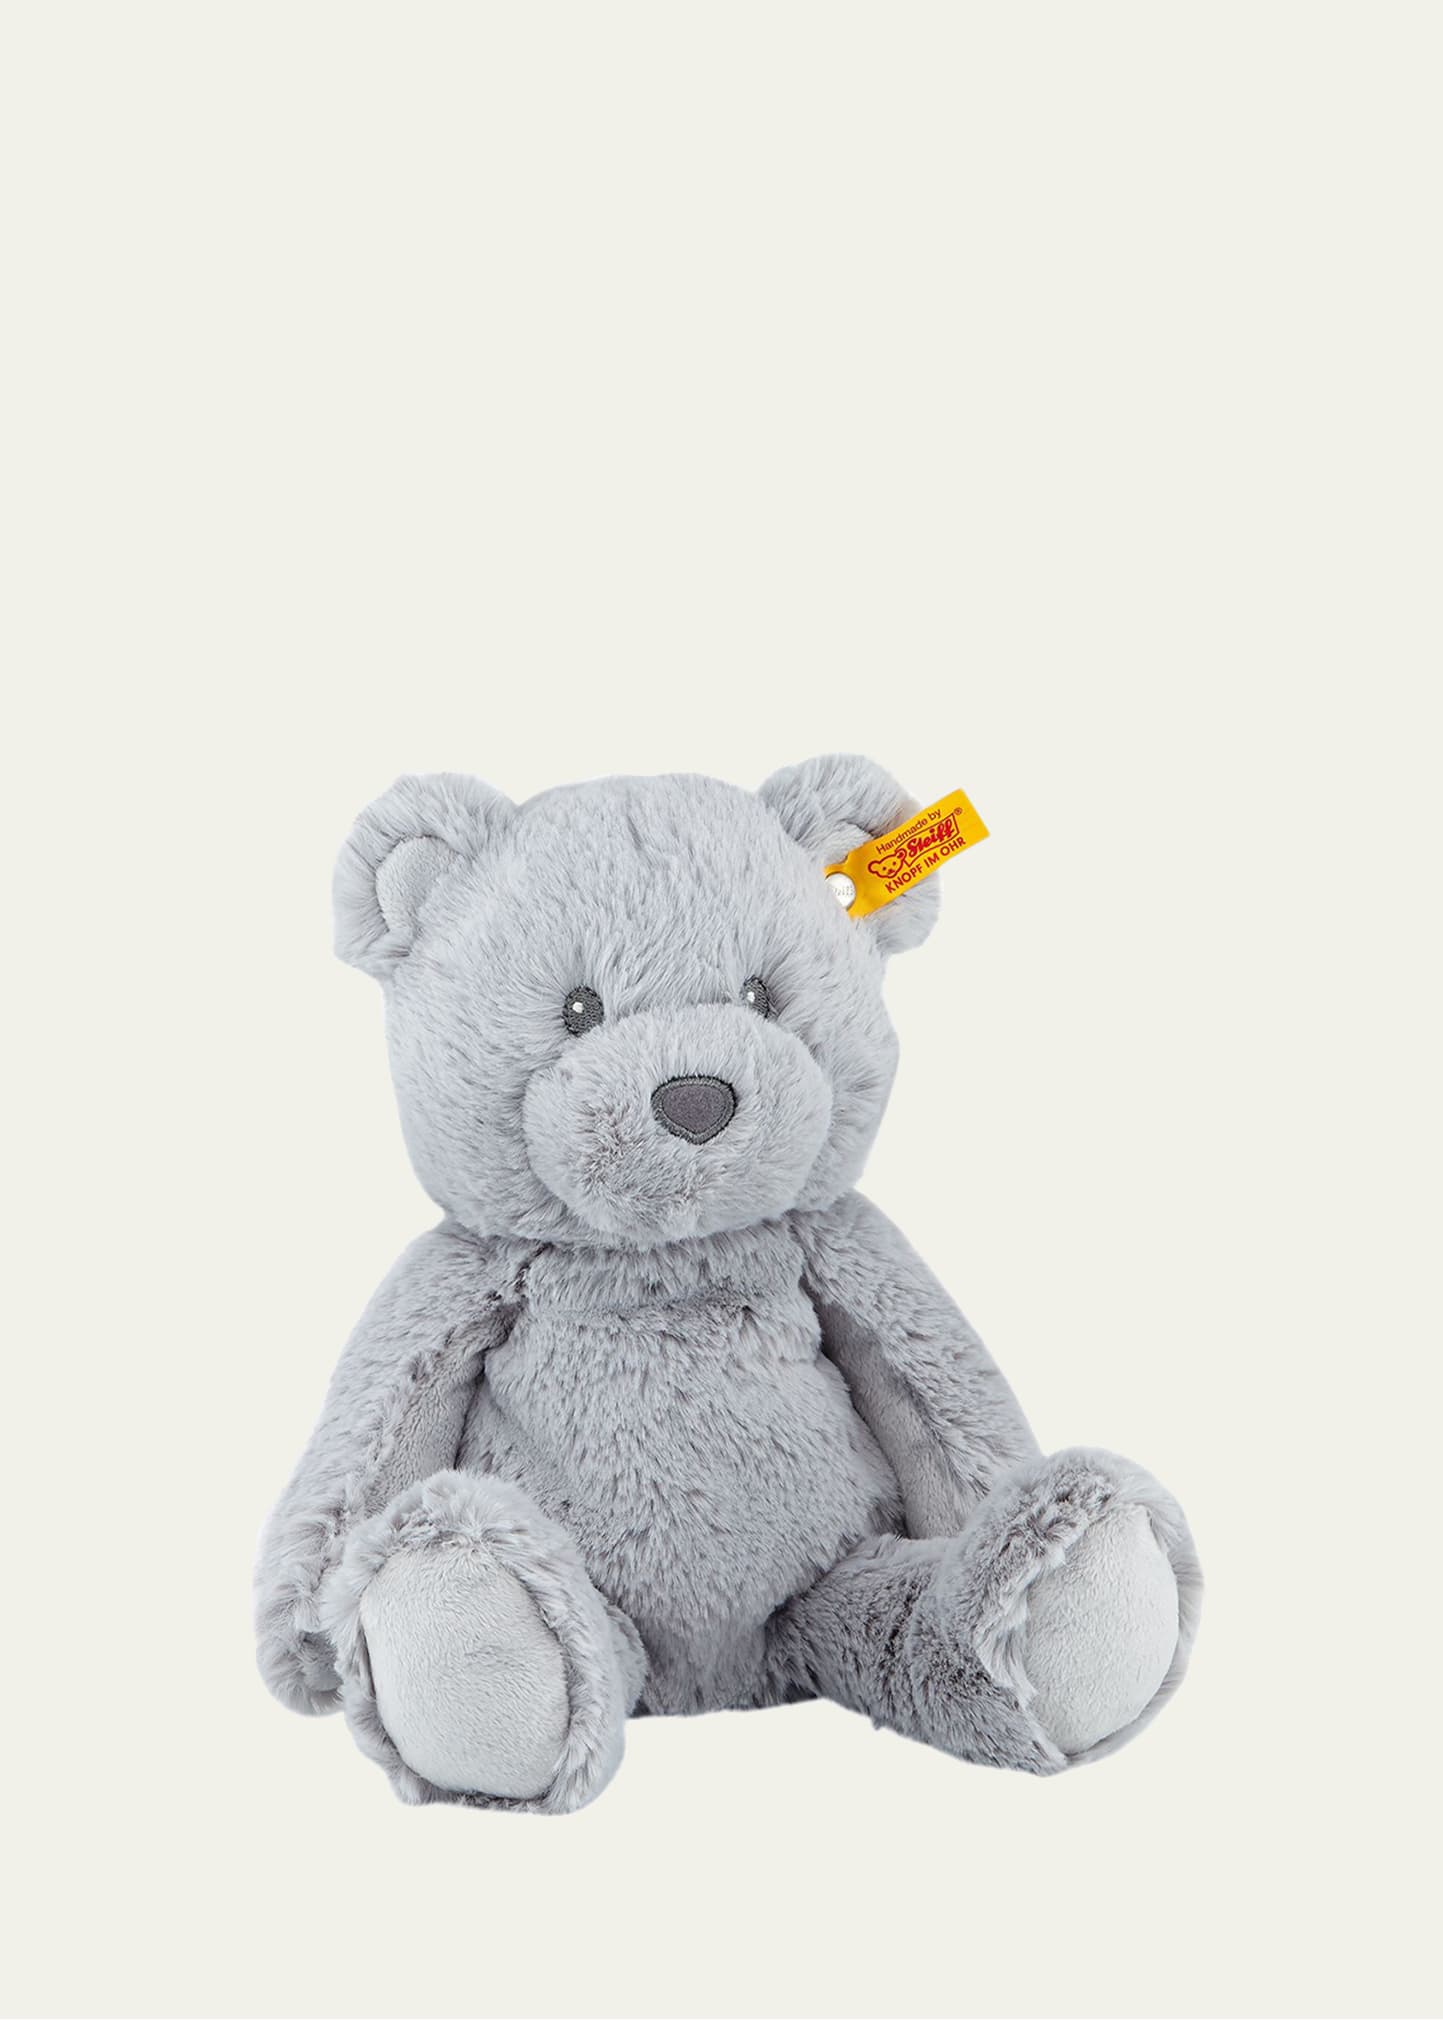 Bearzy Teddy Bear, Grey